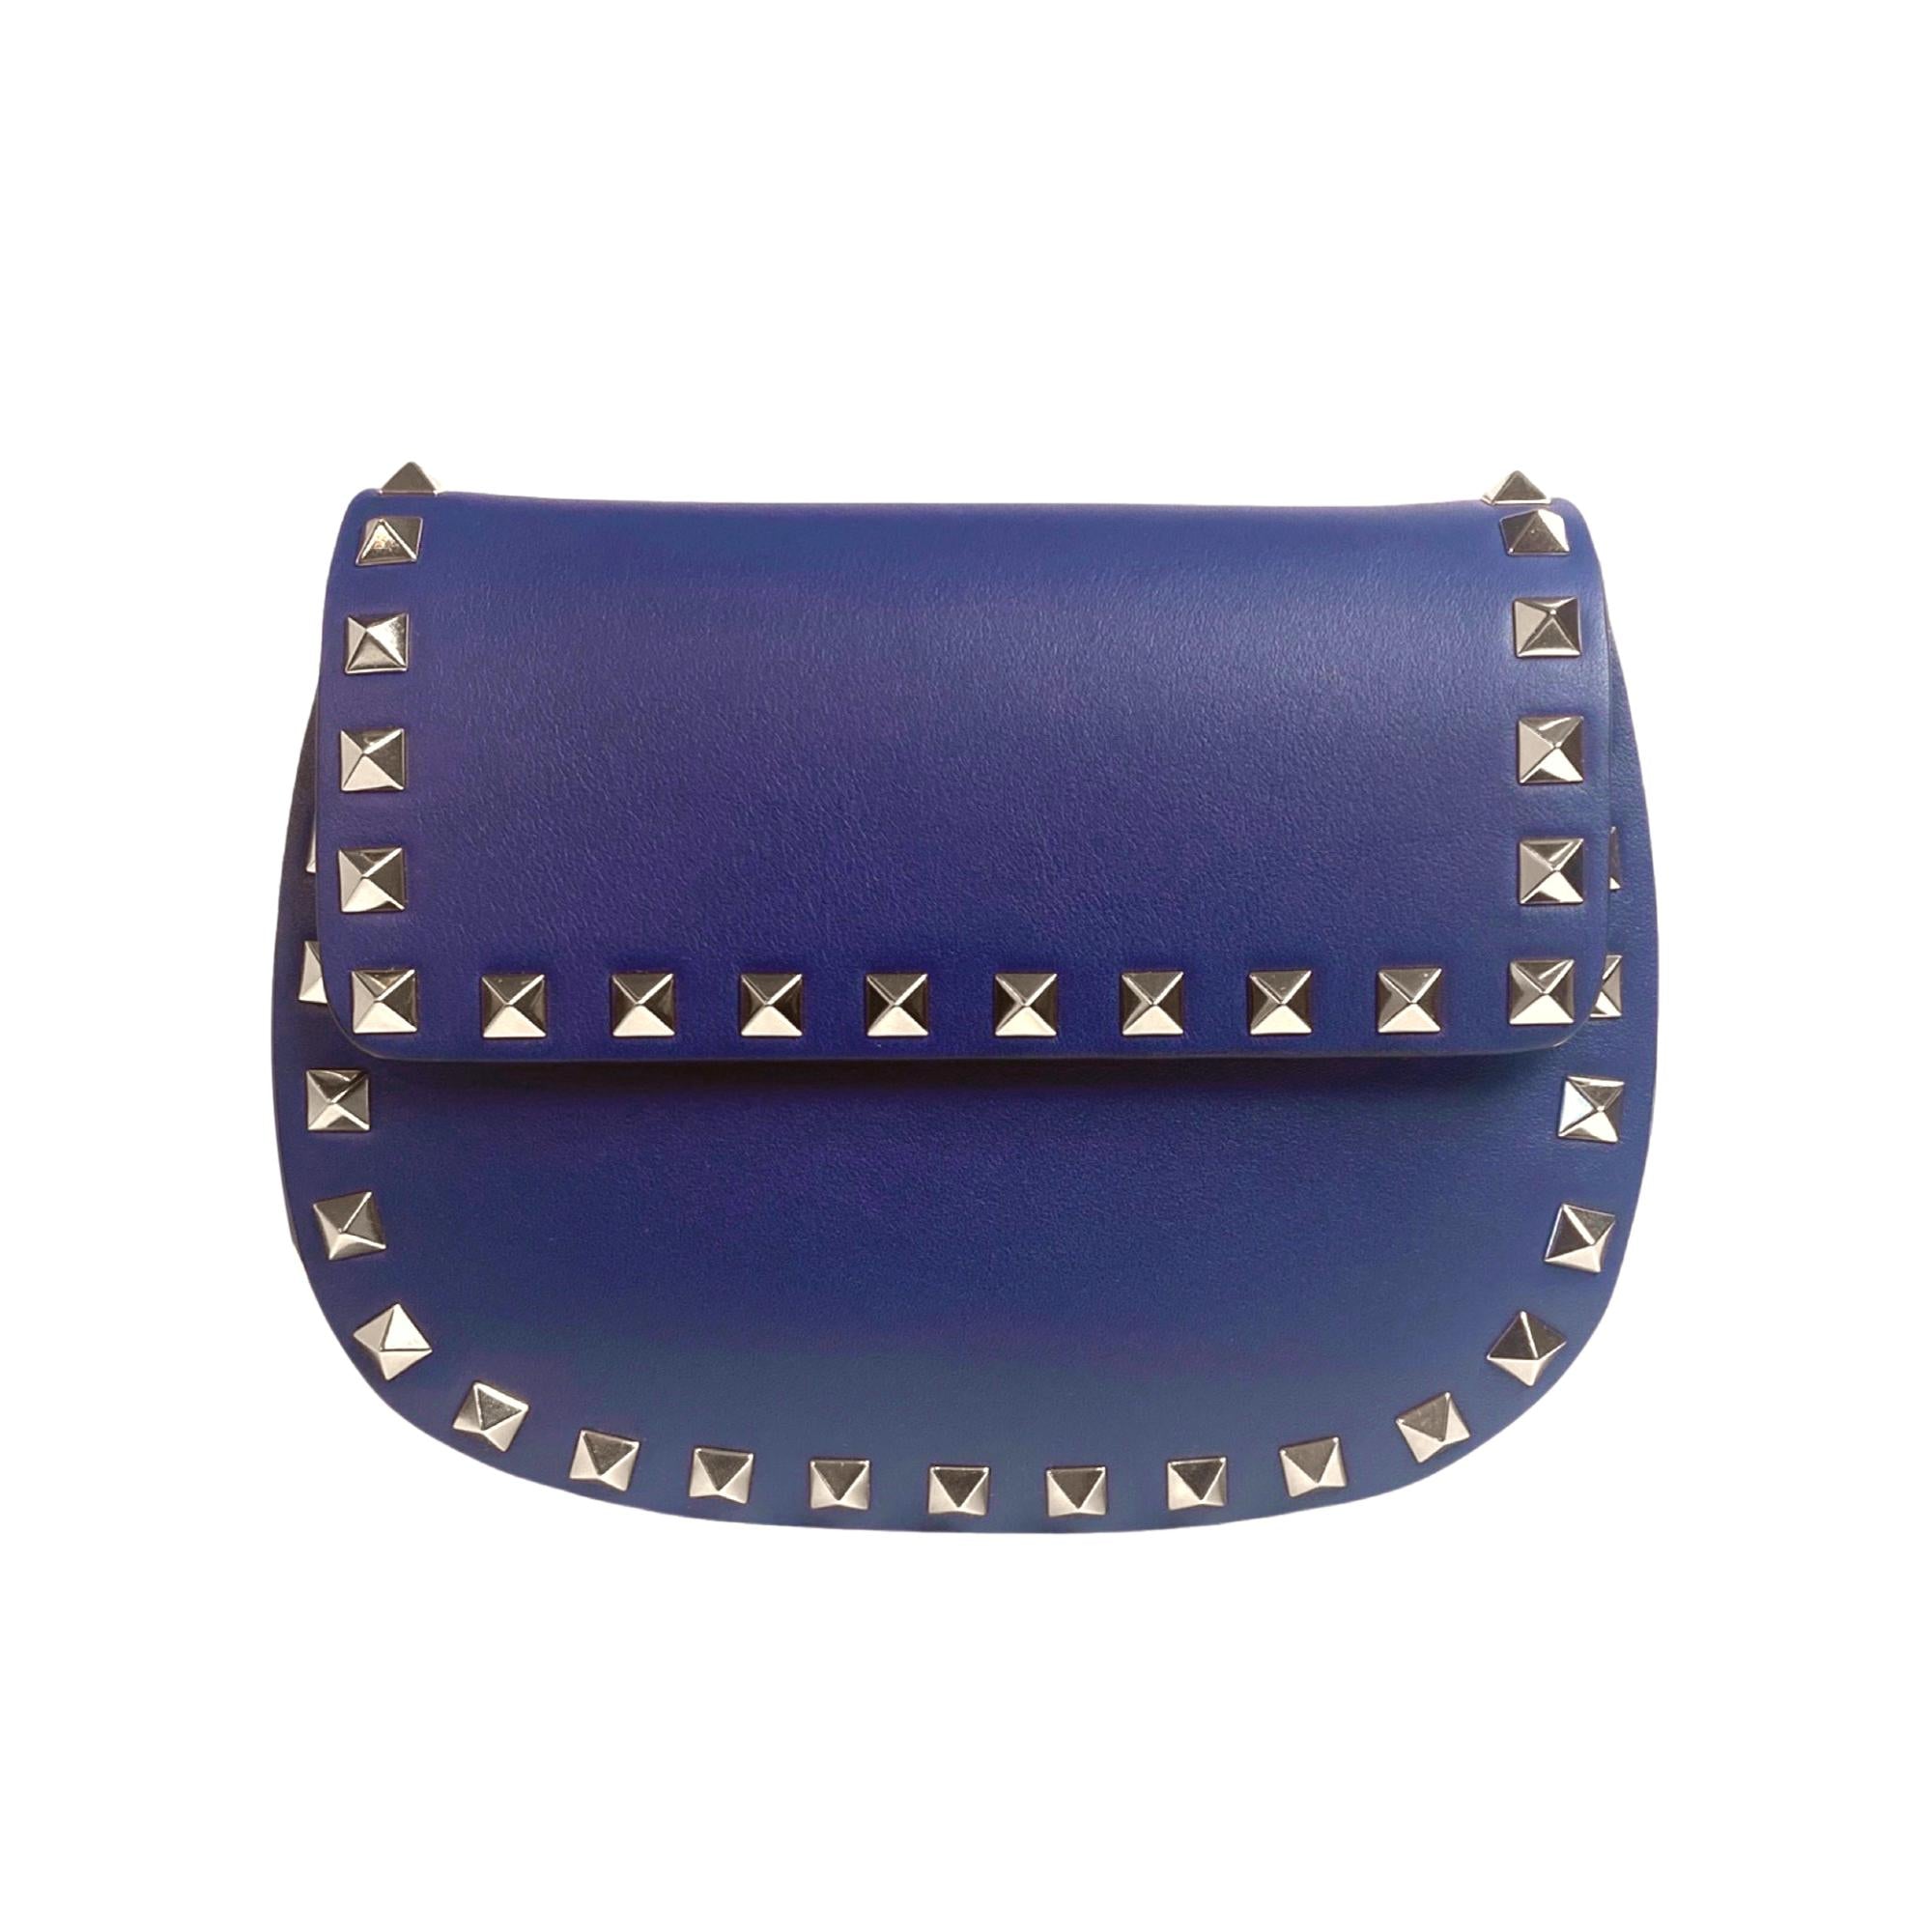 Valentino Garavani Rockstud Blue Leather Small Chain Crossbody Bag